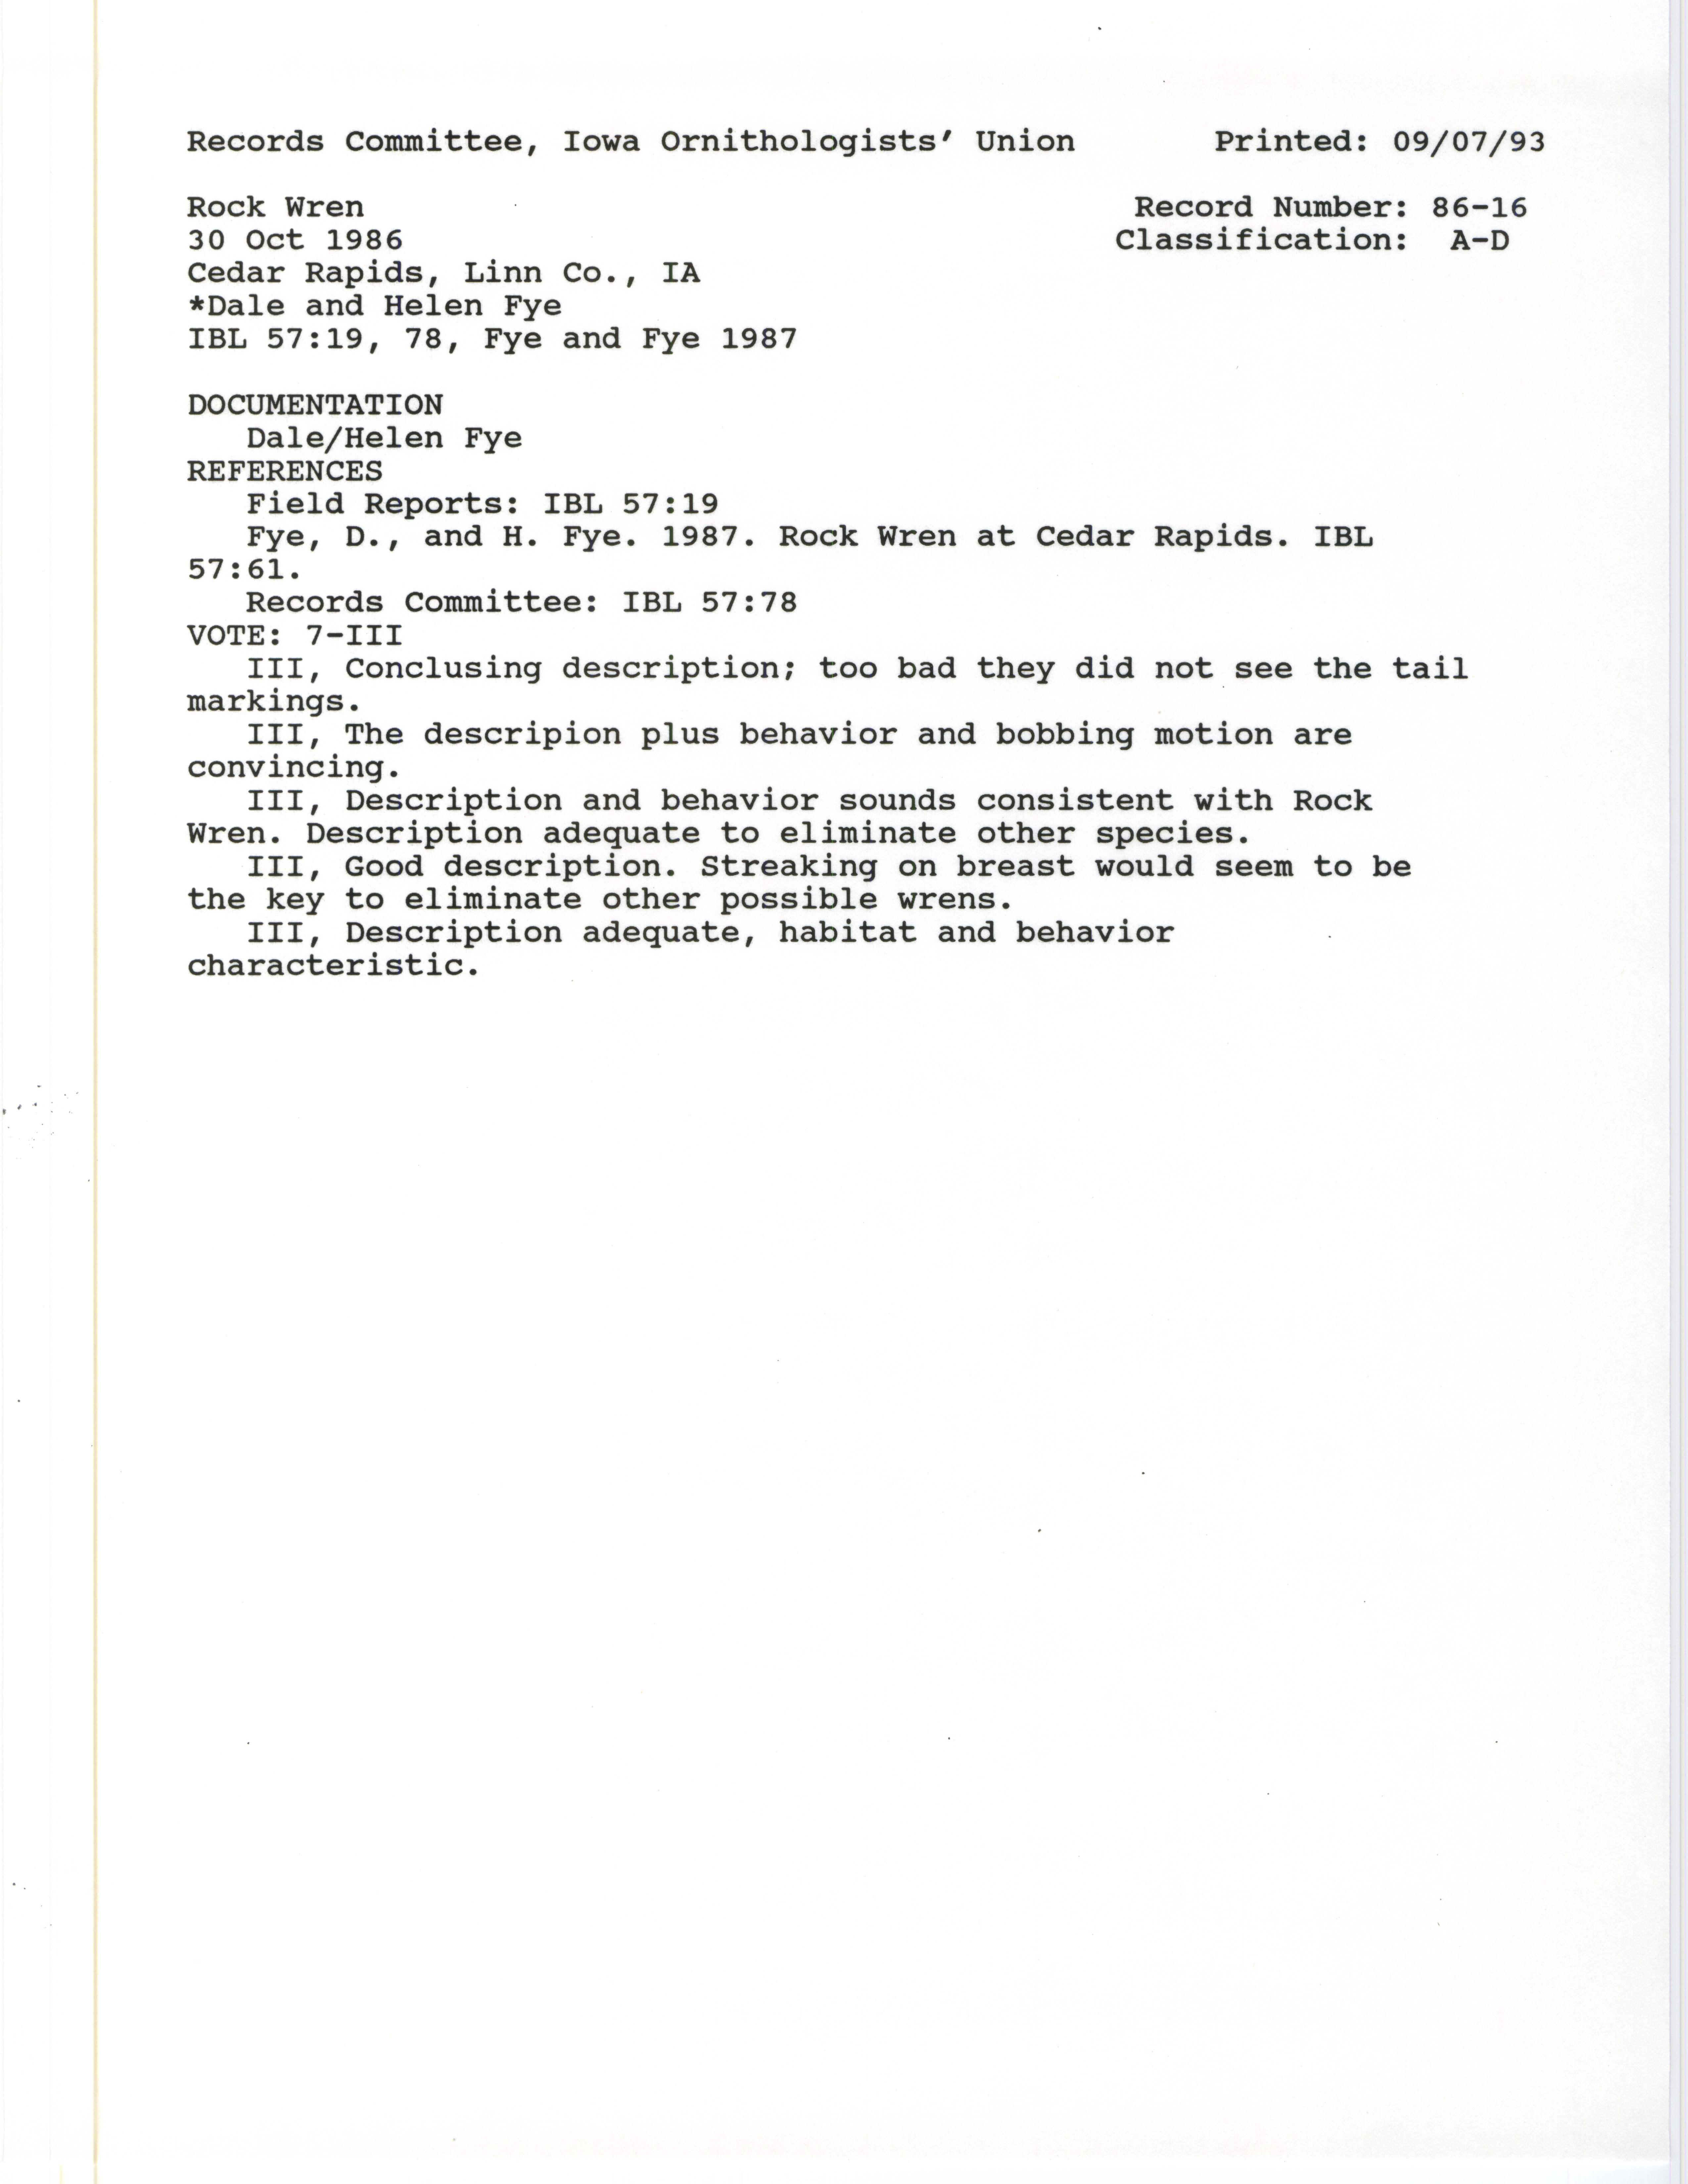 Records Committee review for rare bird sighting for Rock Wren near C Street Roller Dam in Cedar Rapids, 1986